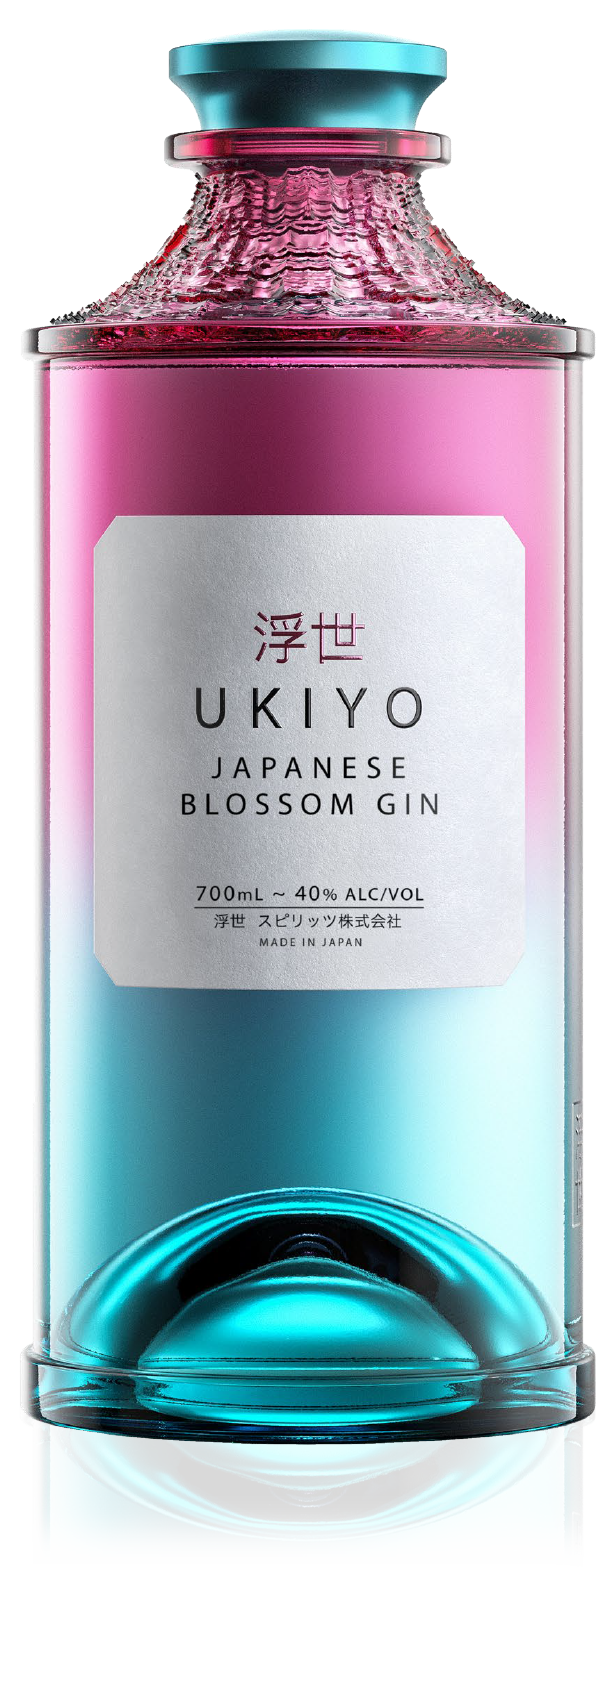 UKIYO Blossom Gin